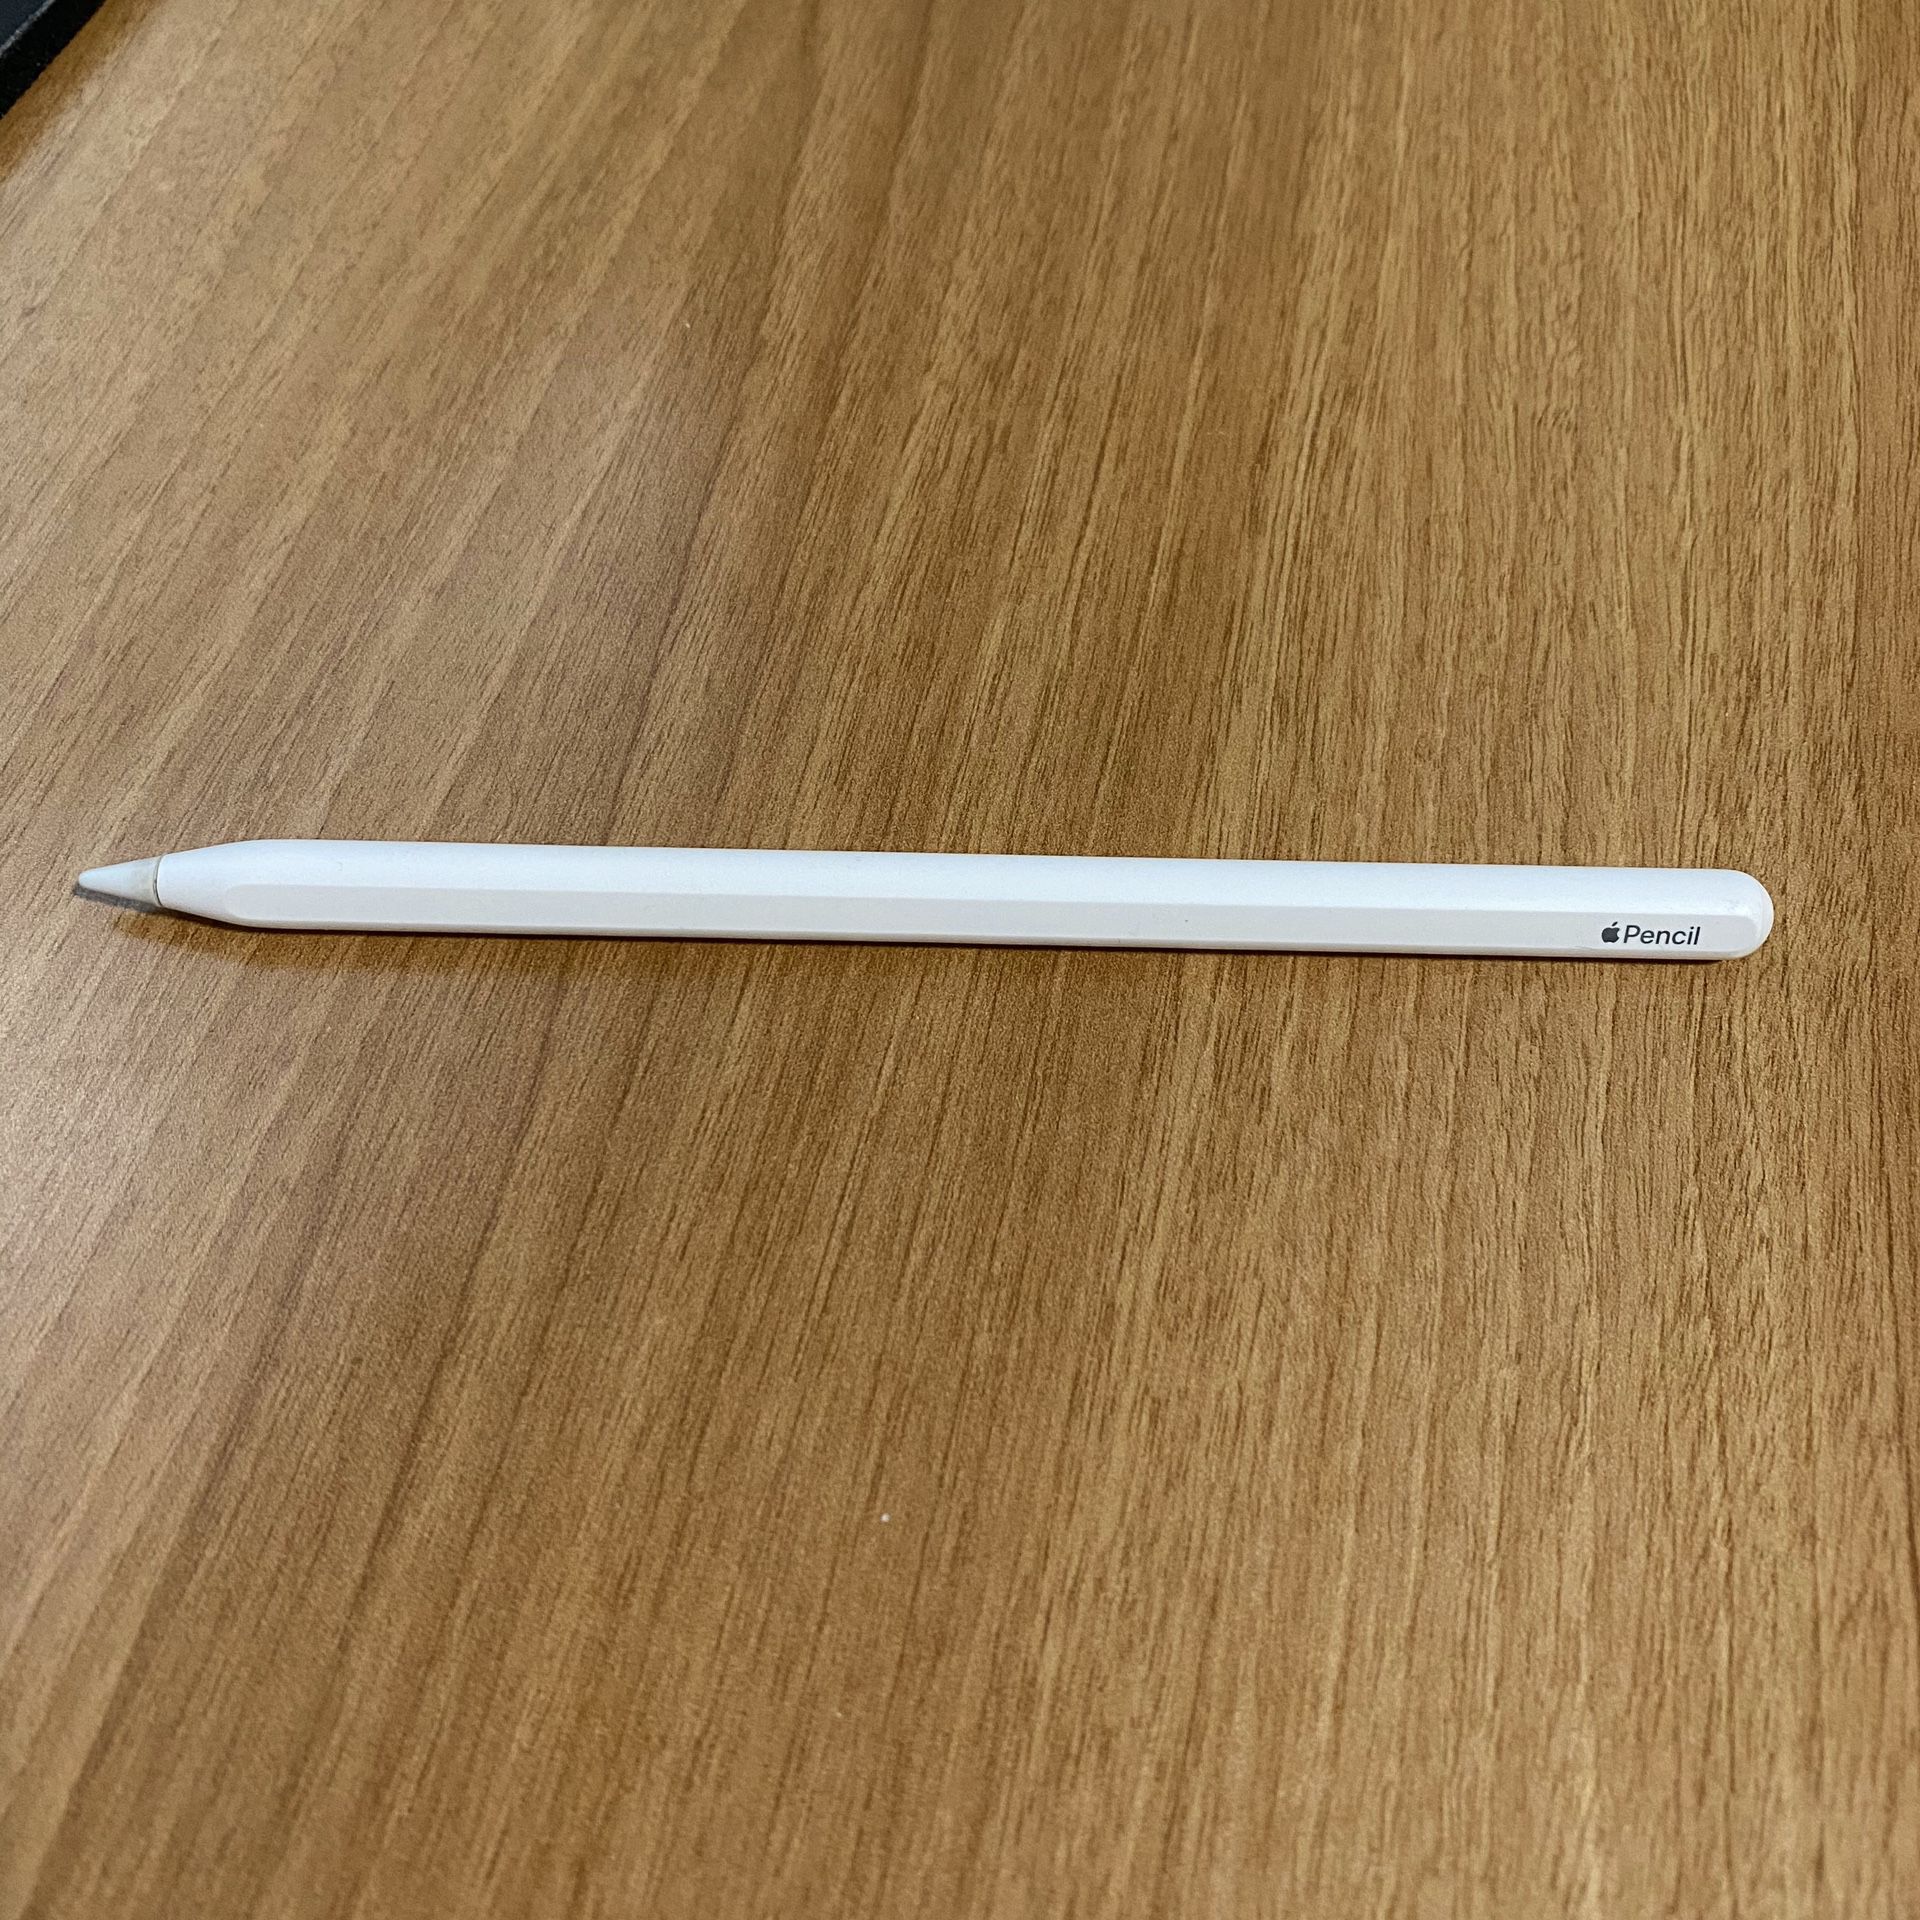 Apple Pencil 2 with original box